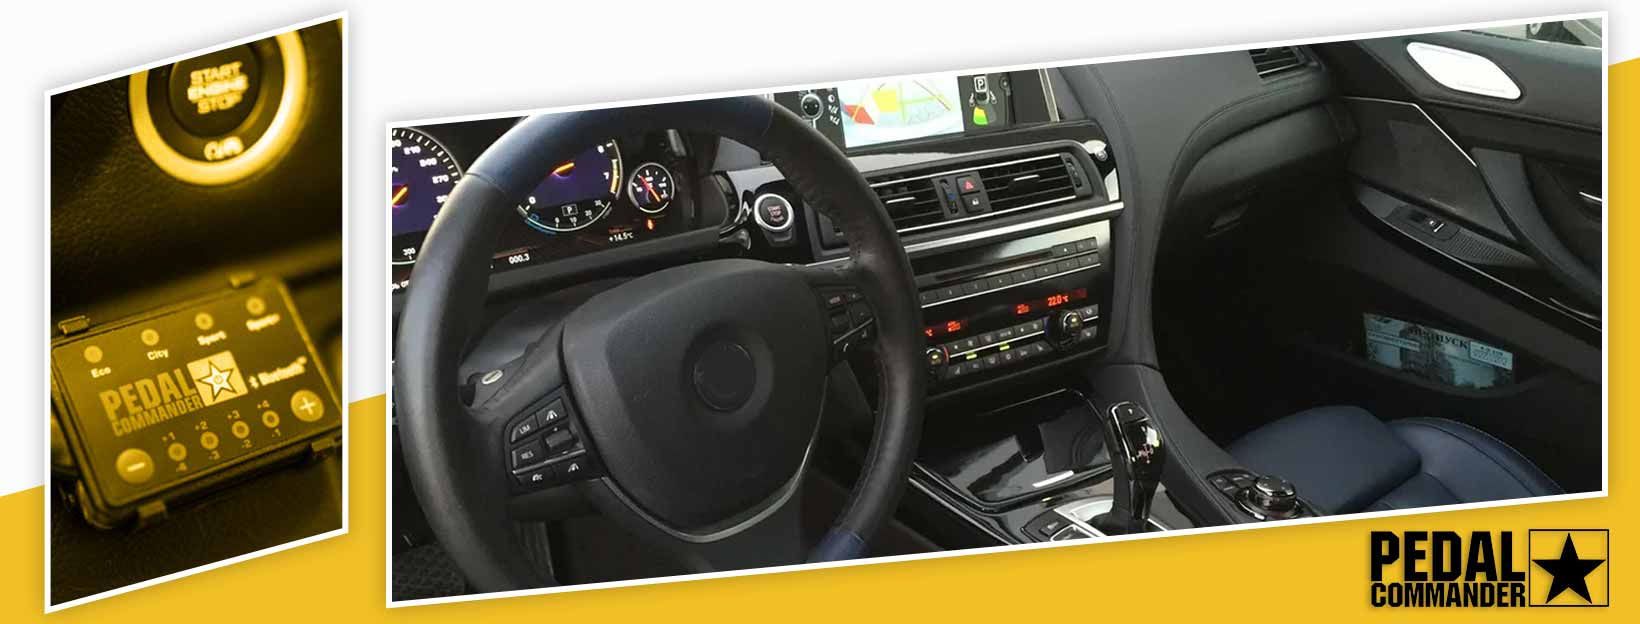 Pedal Commander for BMW Alpina B6 - interior